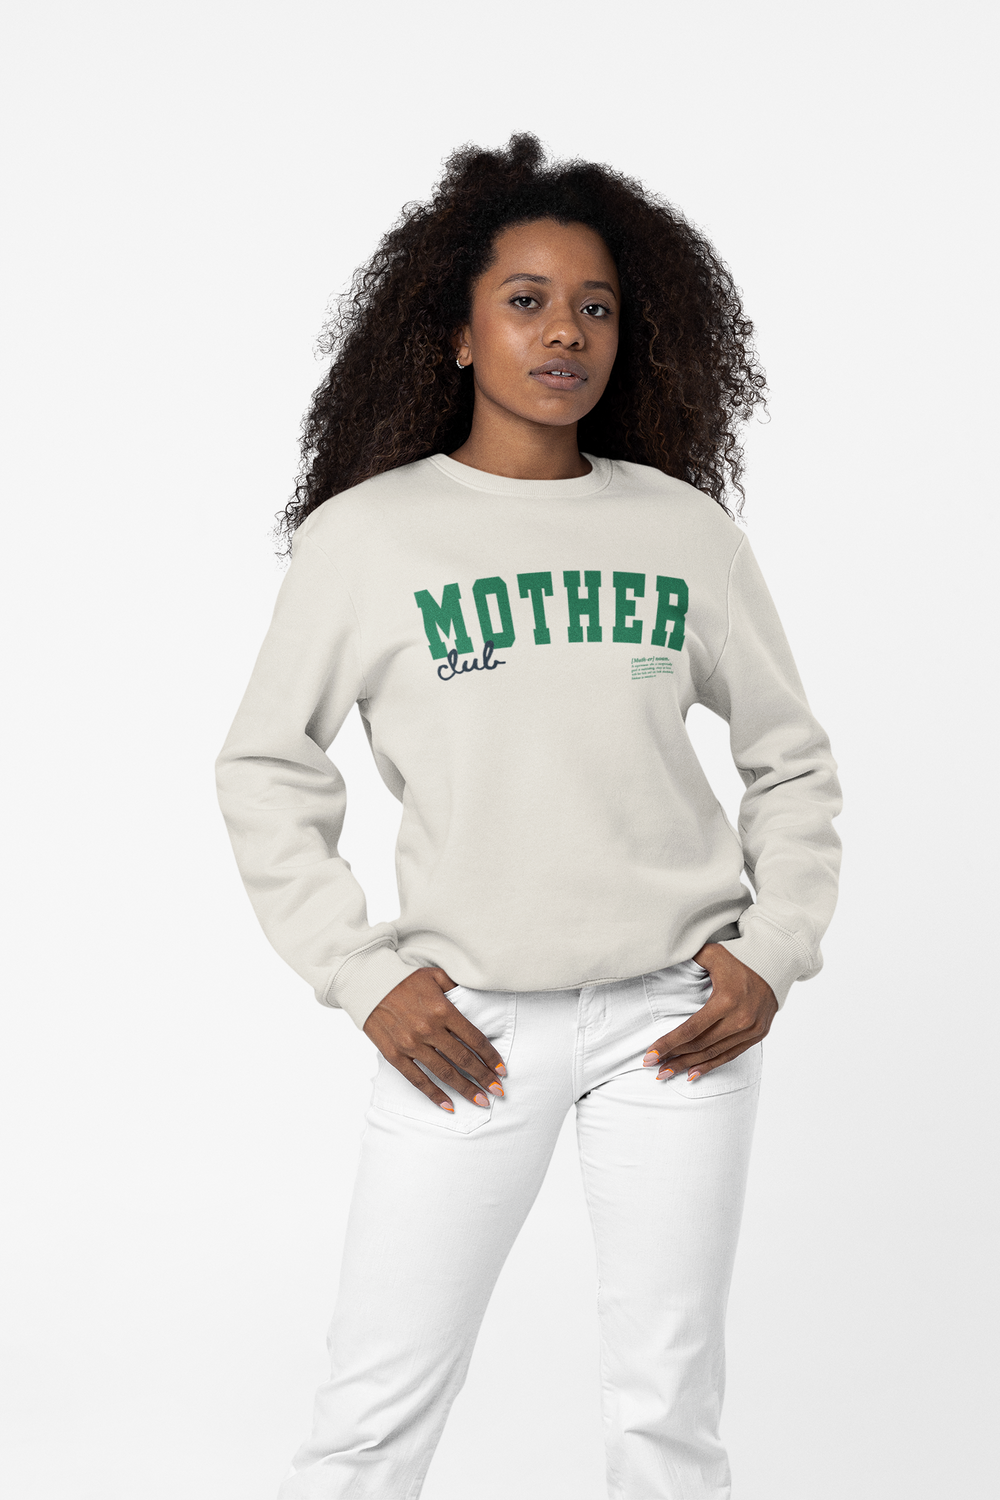 Mother Club - Sweatshirt  (FINAL SALE)